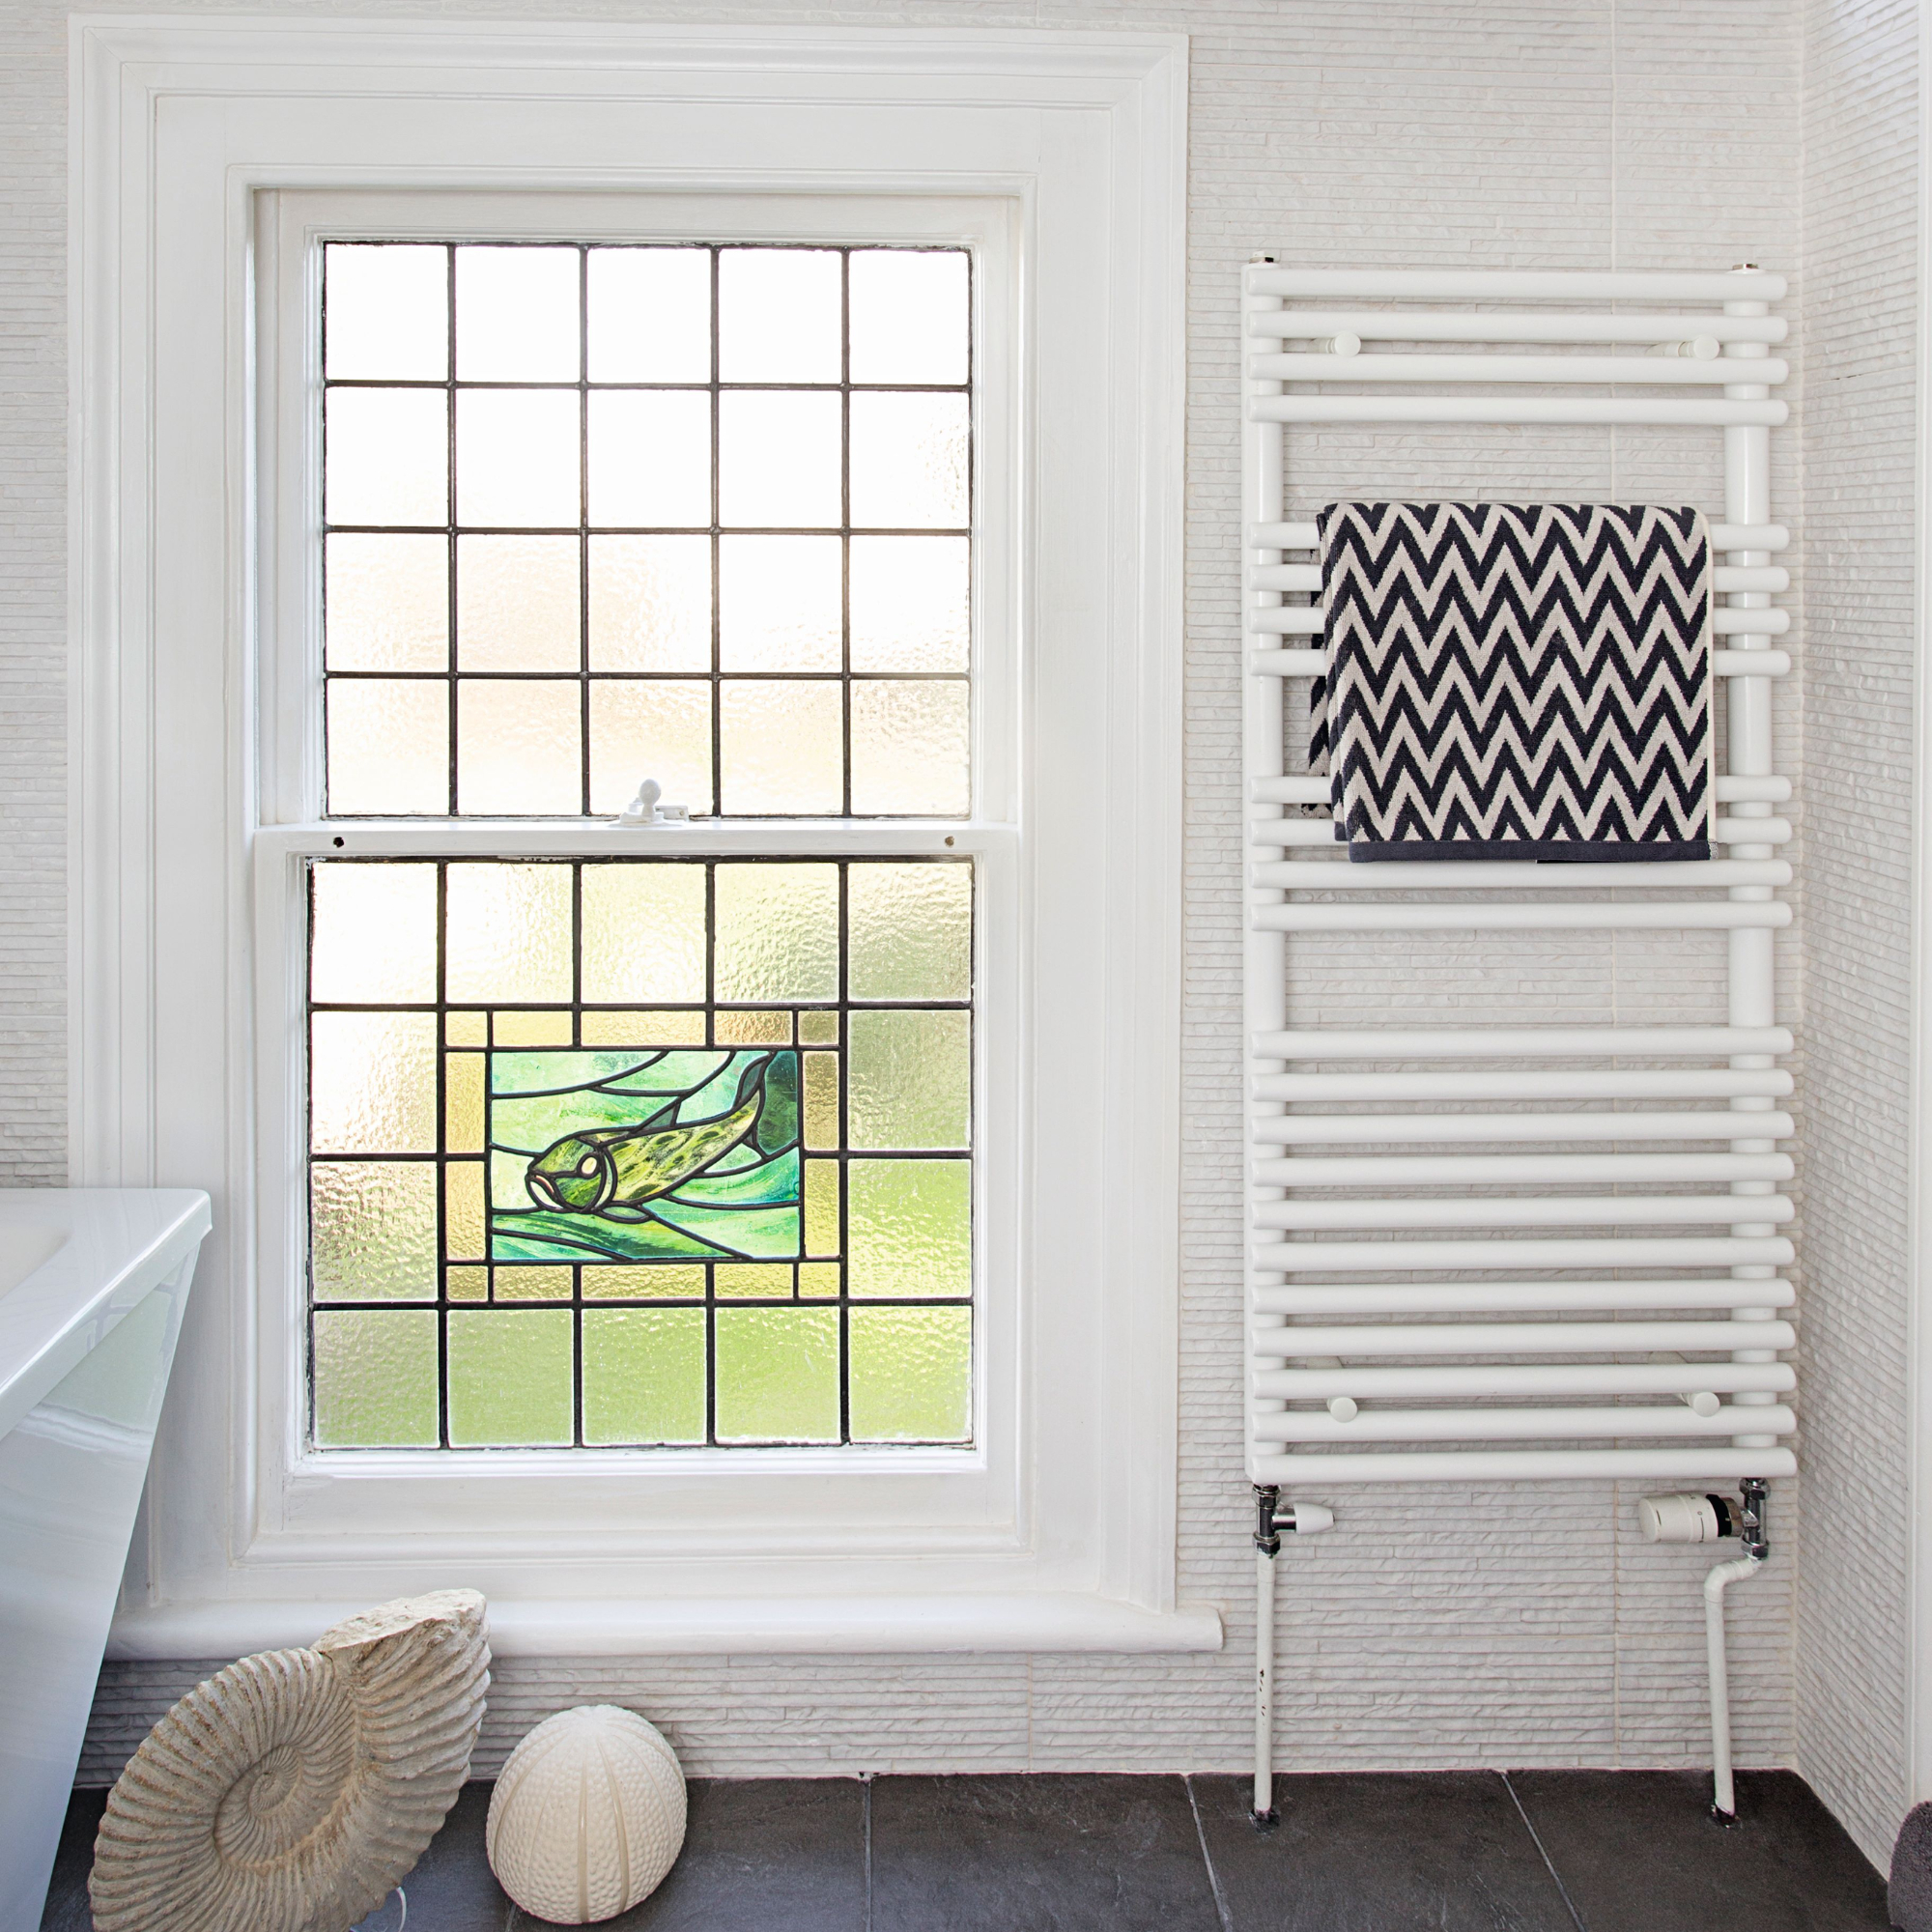 Stained glass bathroom window, heated towel rail with dark grey chevron towel, marine fossil ornament